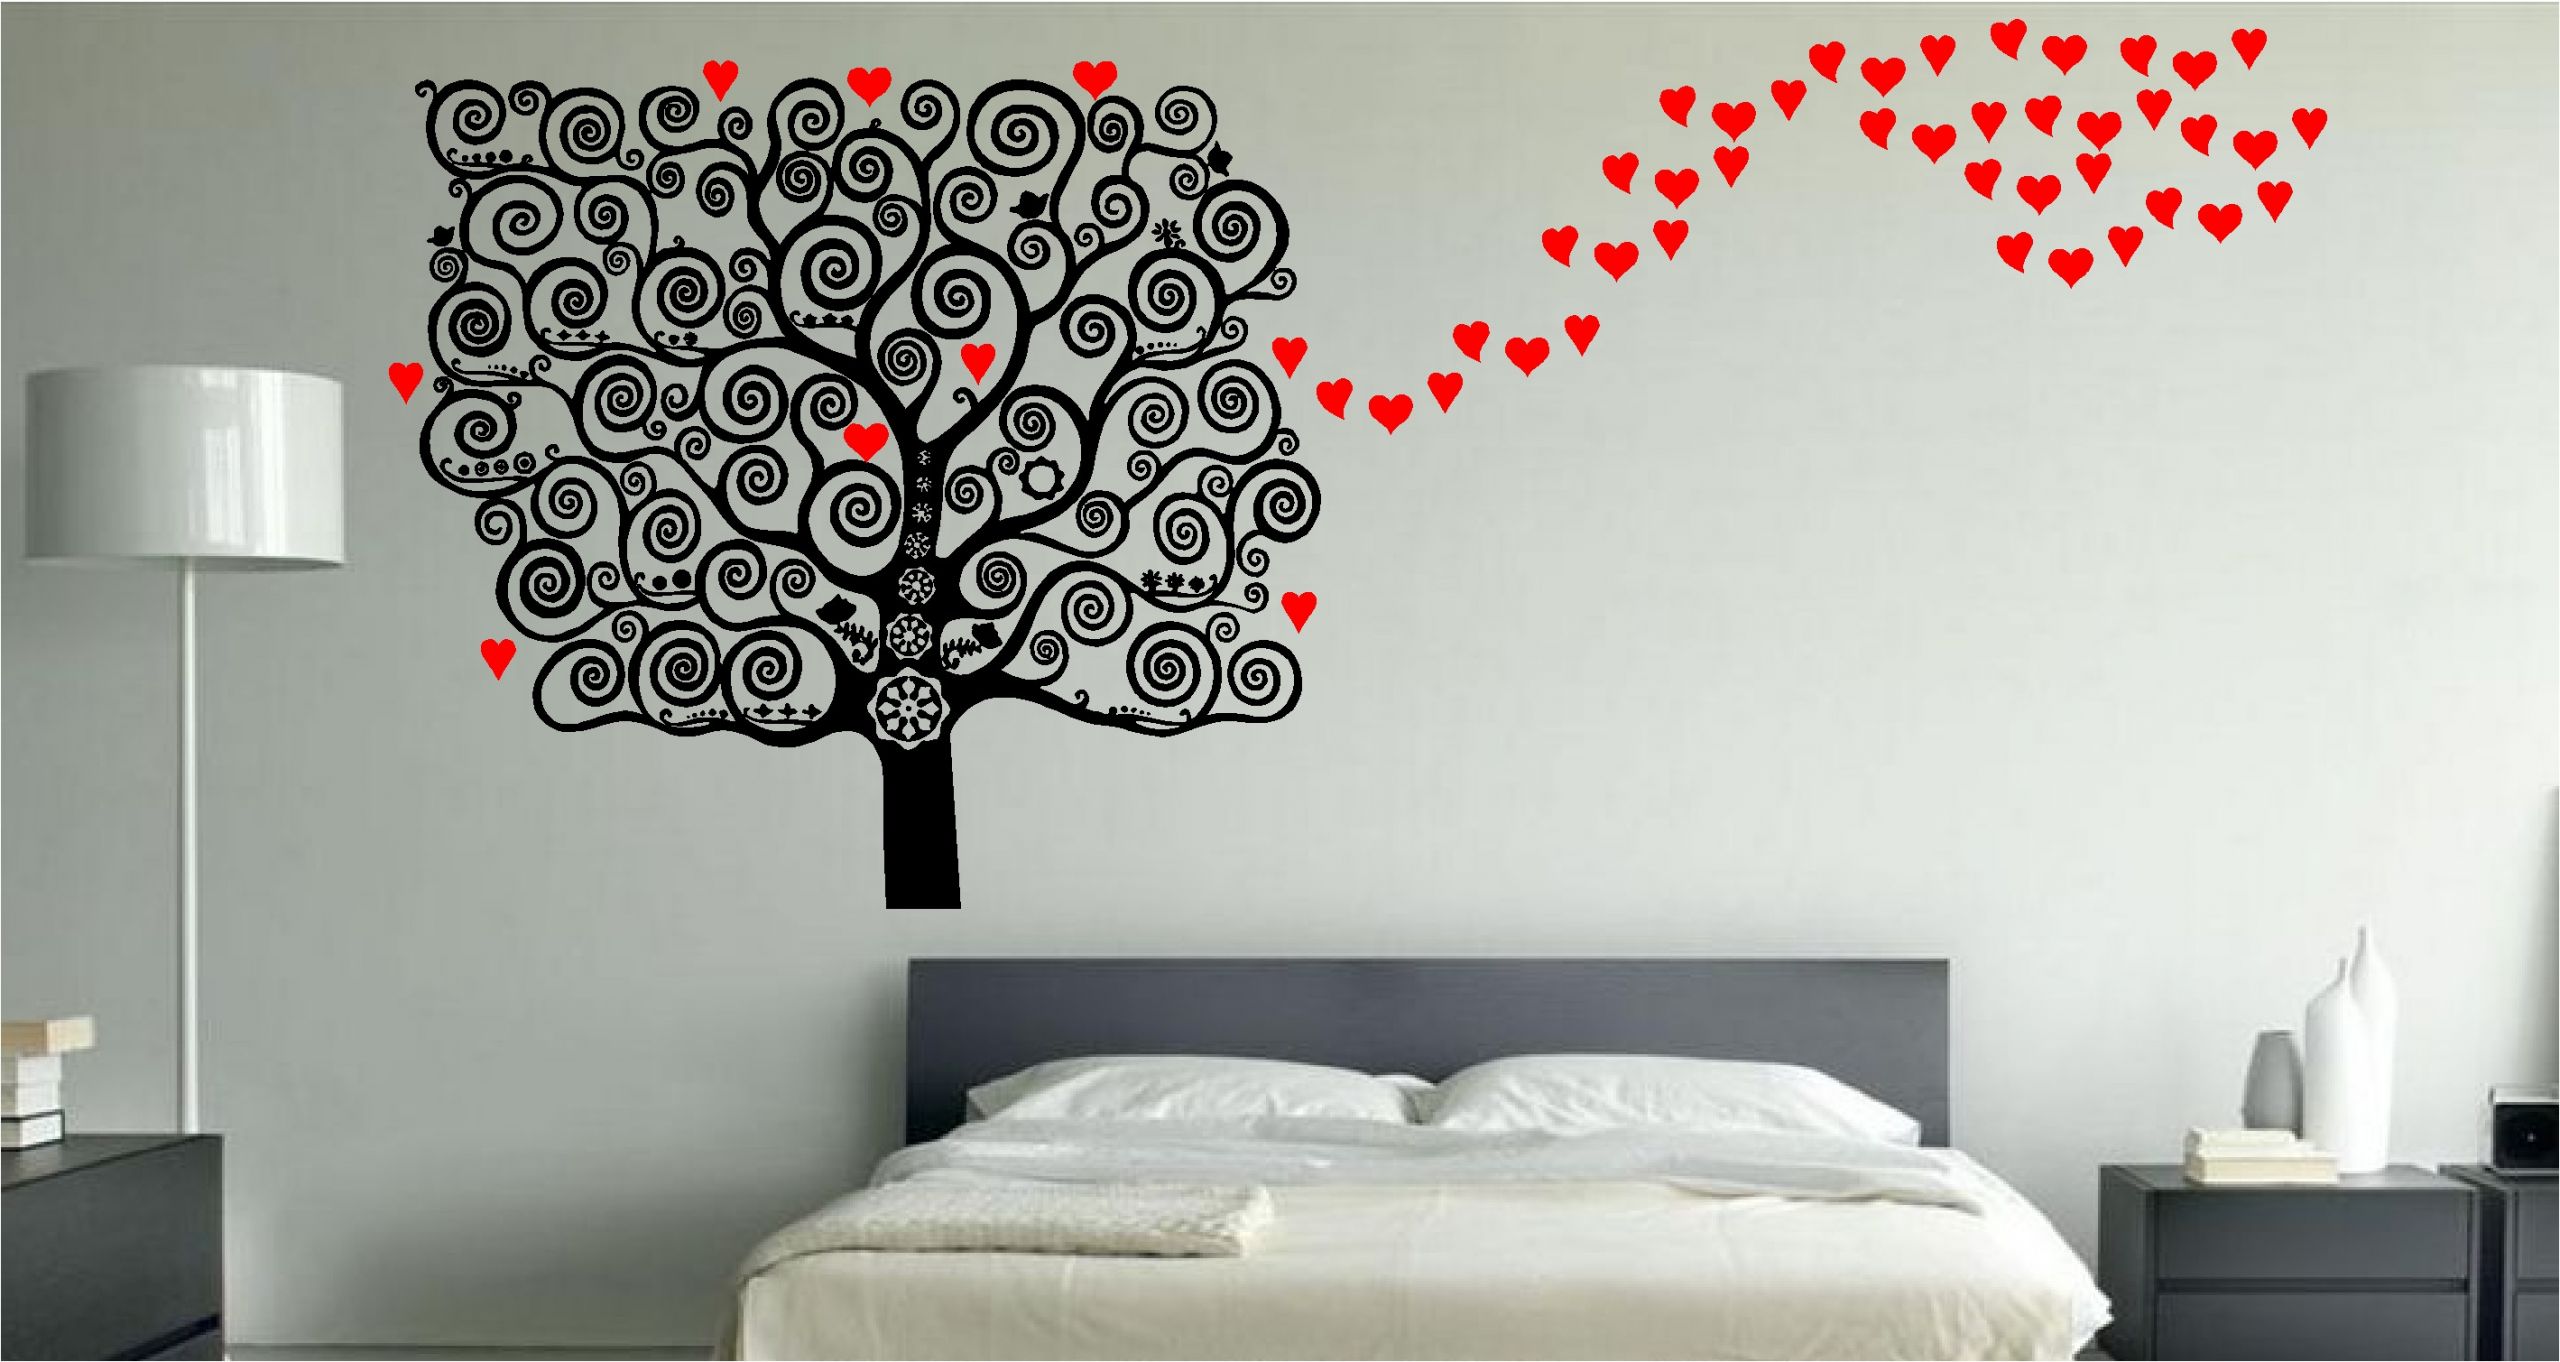 Wall Art Decals For Bedroom
 STUNNING LOVE HEART TREE wall art sticker decal BEDROOM